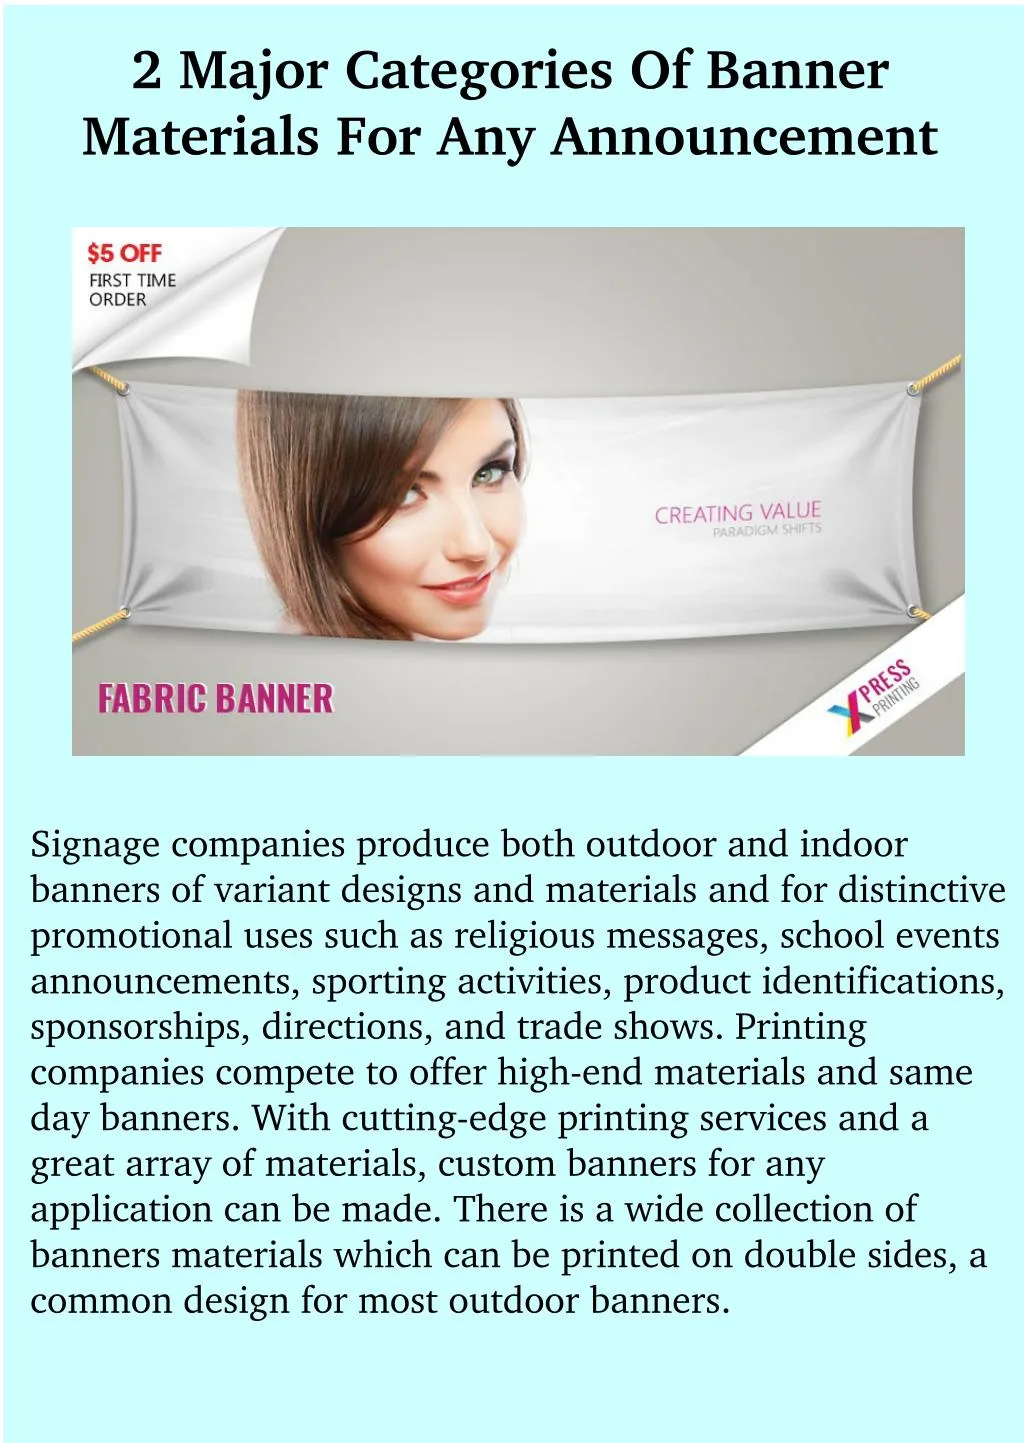 2 major categories of banner materials